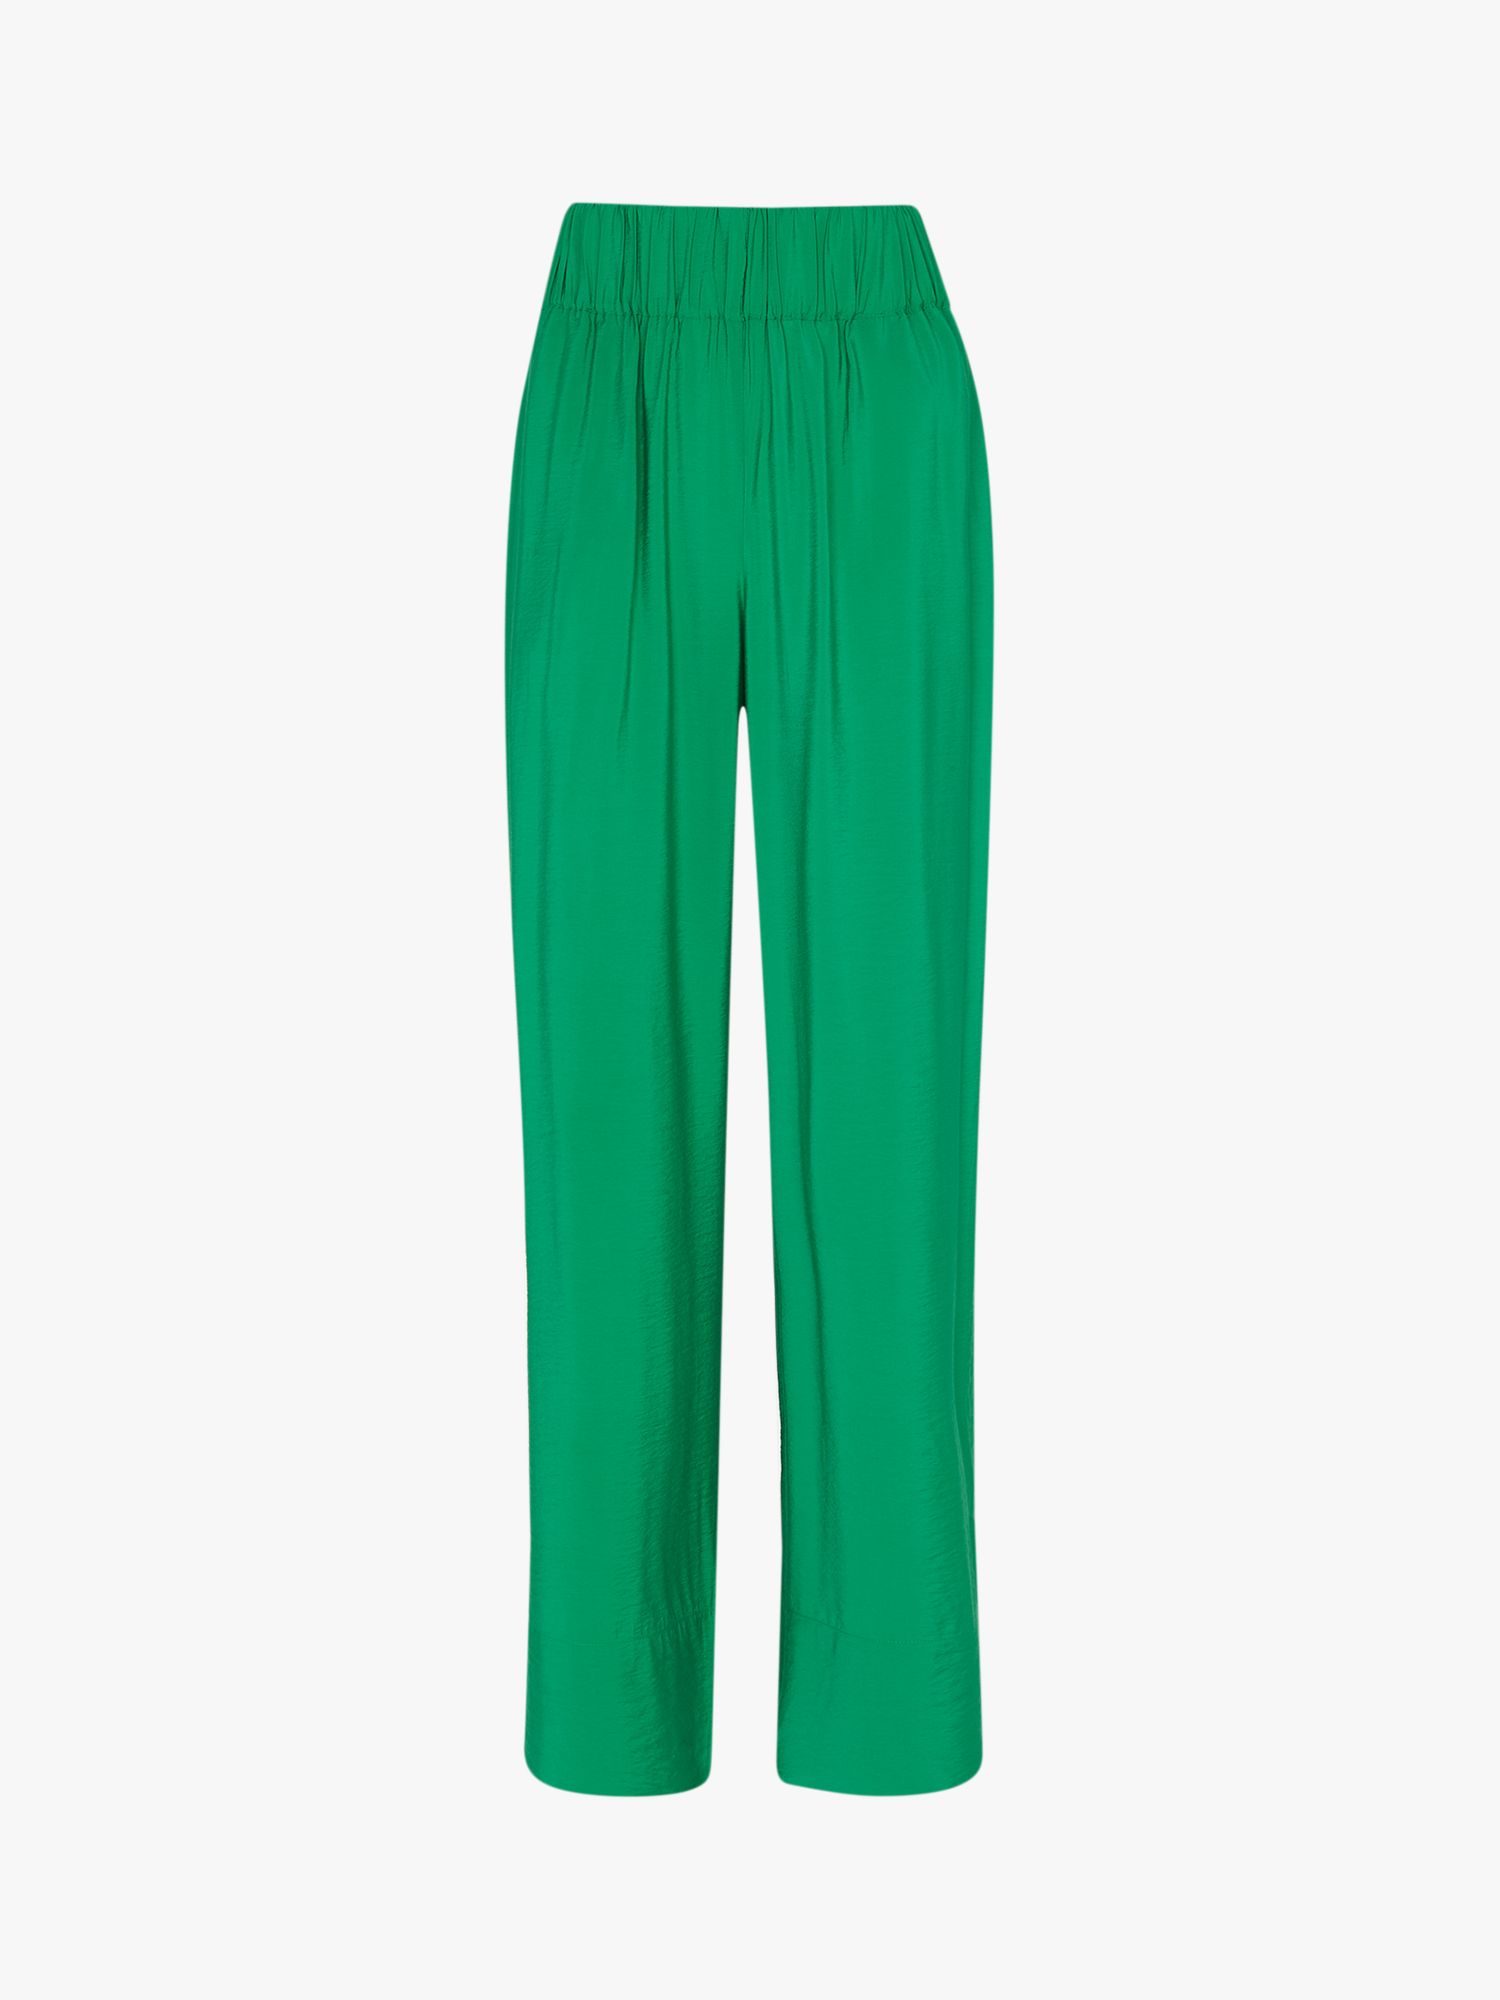 Whistles Nicola Elasticated Waist Trousers, Green at John Lewis & Partners